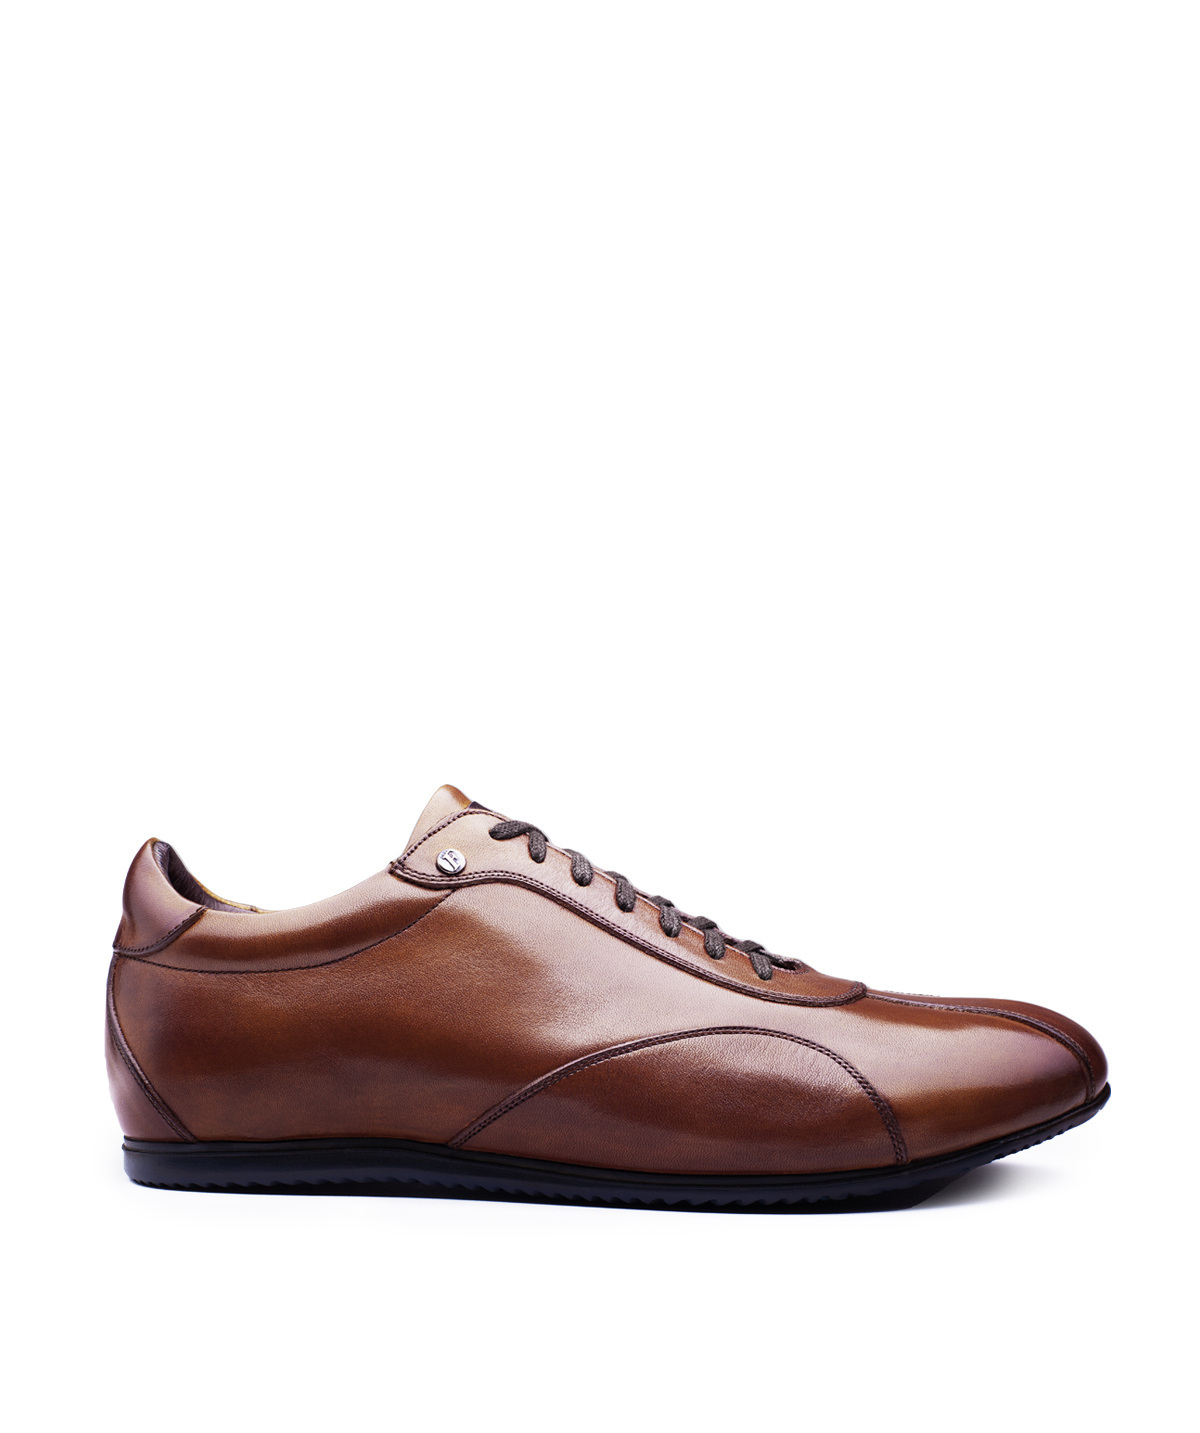 https://www.finsbury-shoes.com/11162-large_default/sneaker-copan-marron.jpg